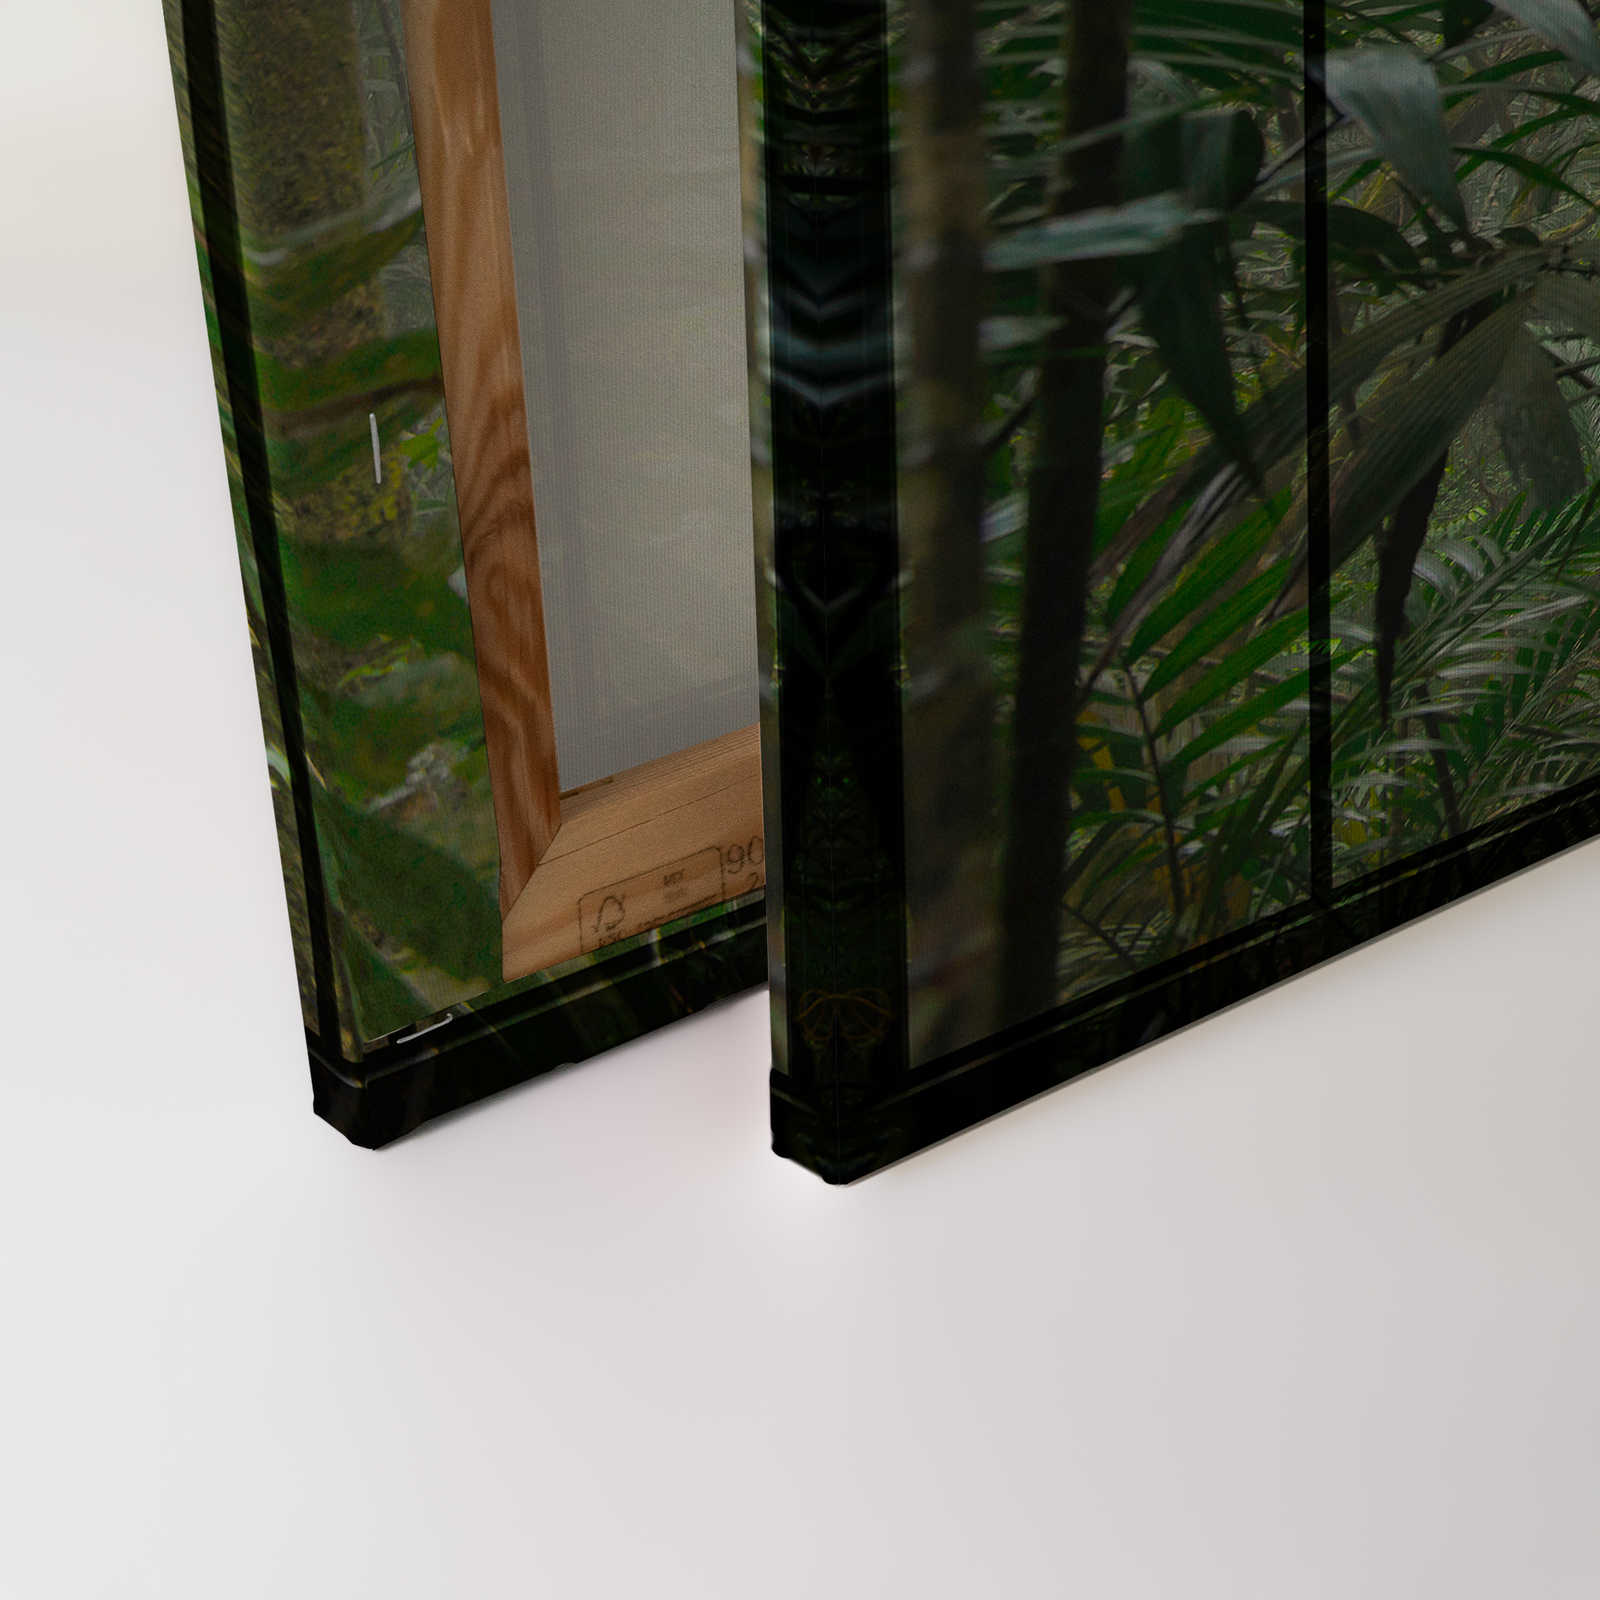             Rainforest 1 - Loftfenster Leinwandbild mit Dschungel Aussicht – 1,20 m x 0,80 m
        